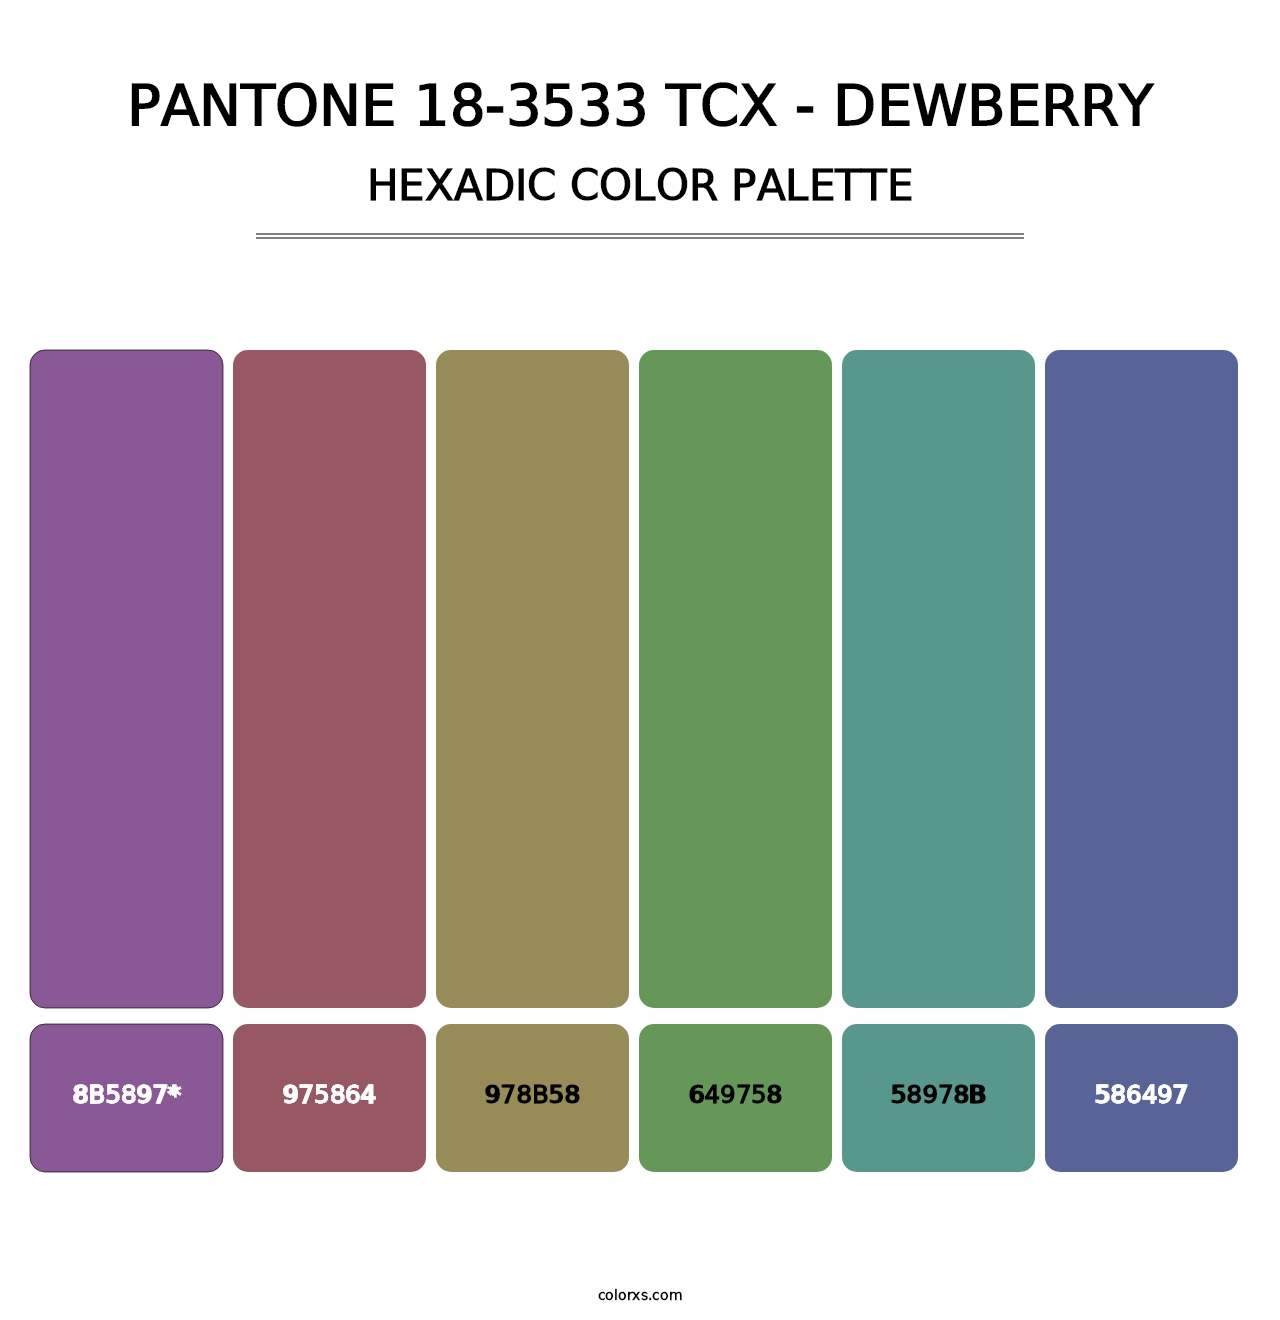 PANTONE 18-3533 TCX - Dewberry - Hexadic Color Palette